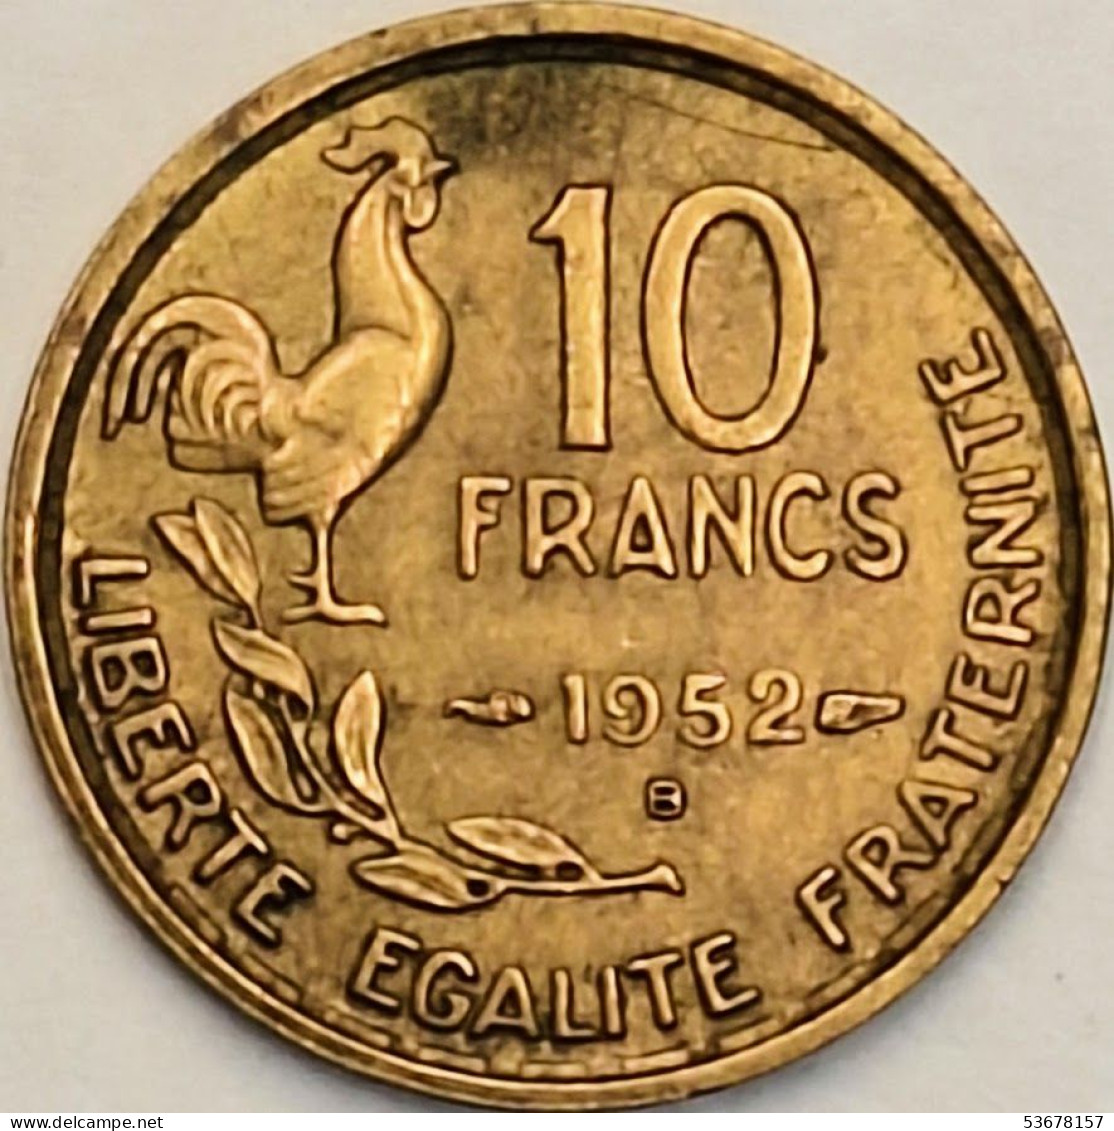 France - 10 Francs 1952 B, KM# 915.2 (#4151) - 10 Francs